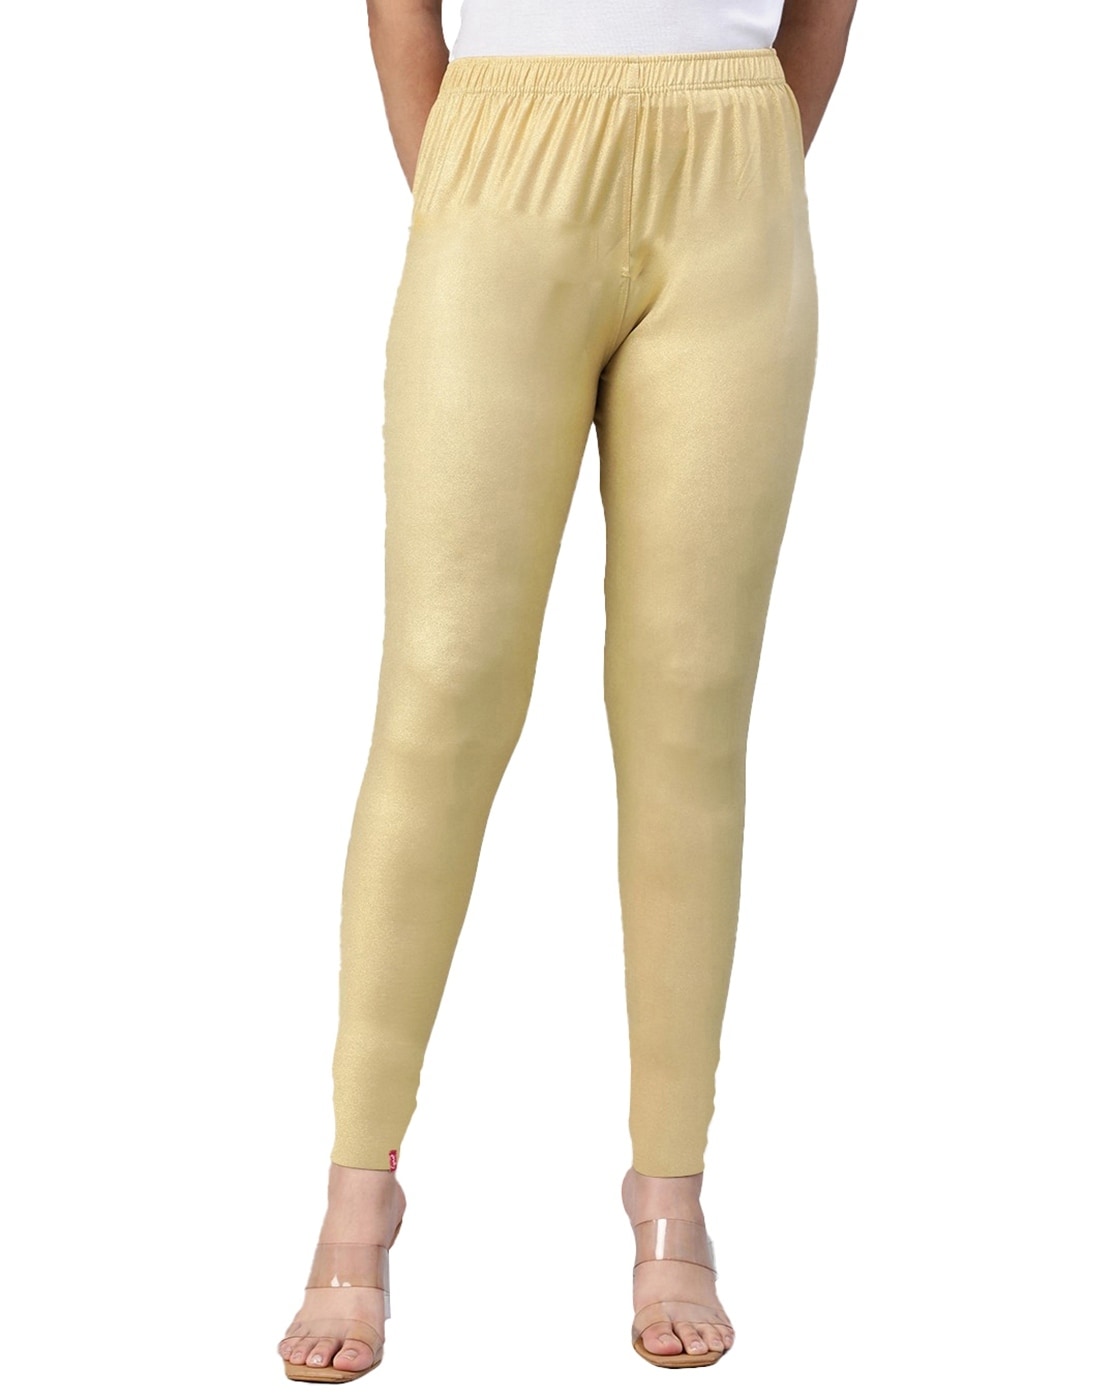 LuxzuryDsp Golden color leggings-thanhphatduhoc.com.vn